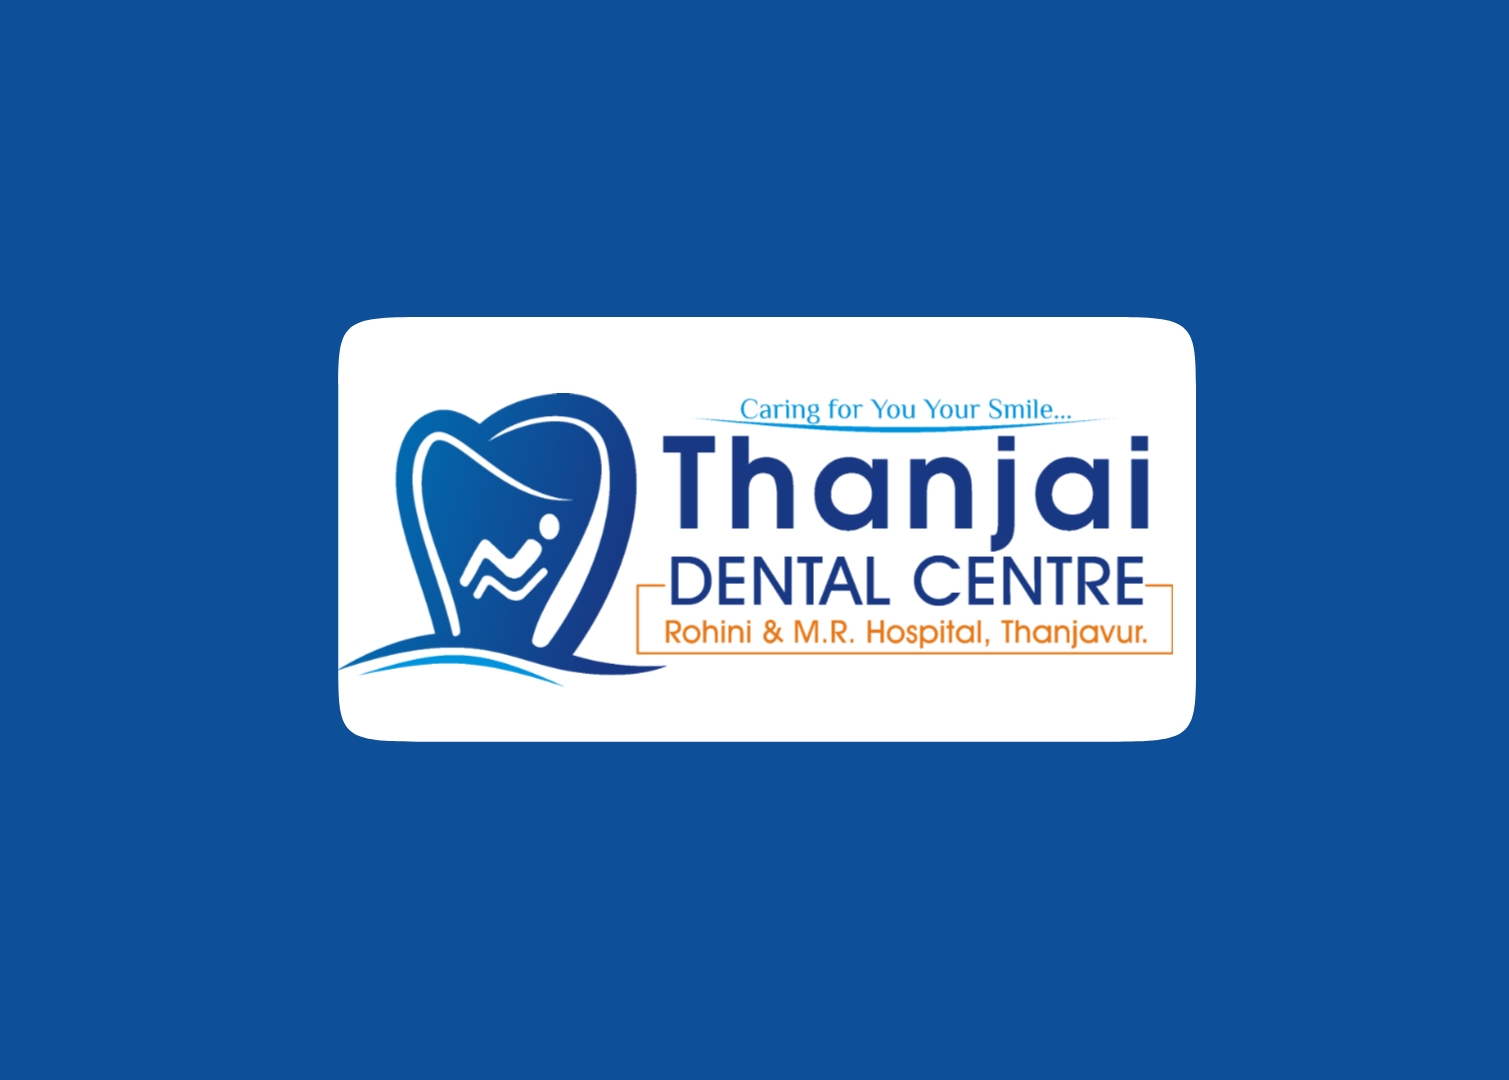 Thanjai dental centre|Dentists|Medical Services